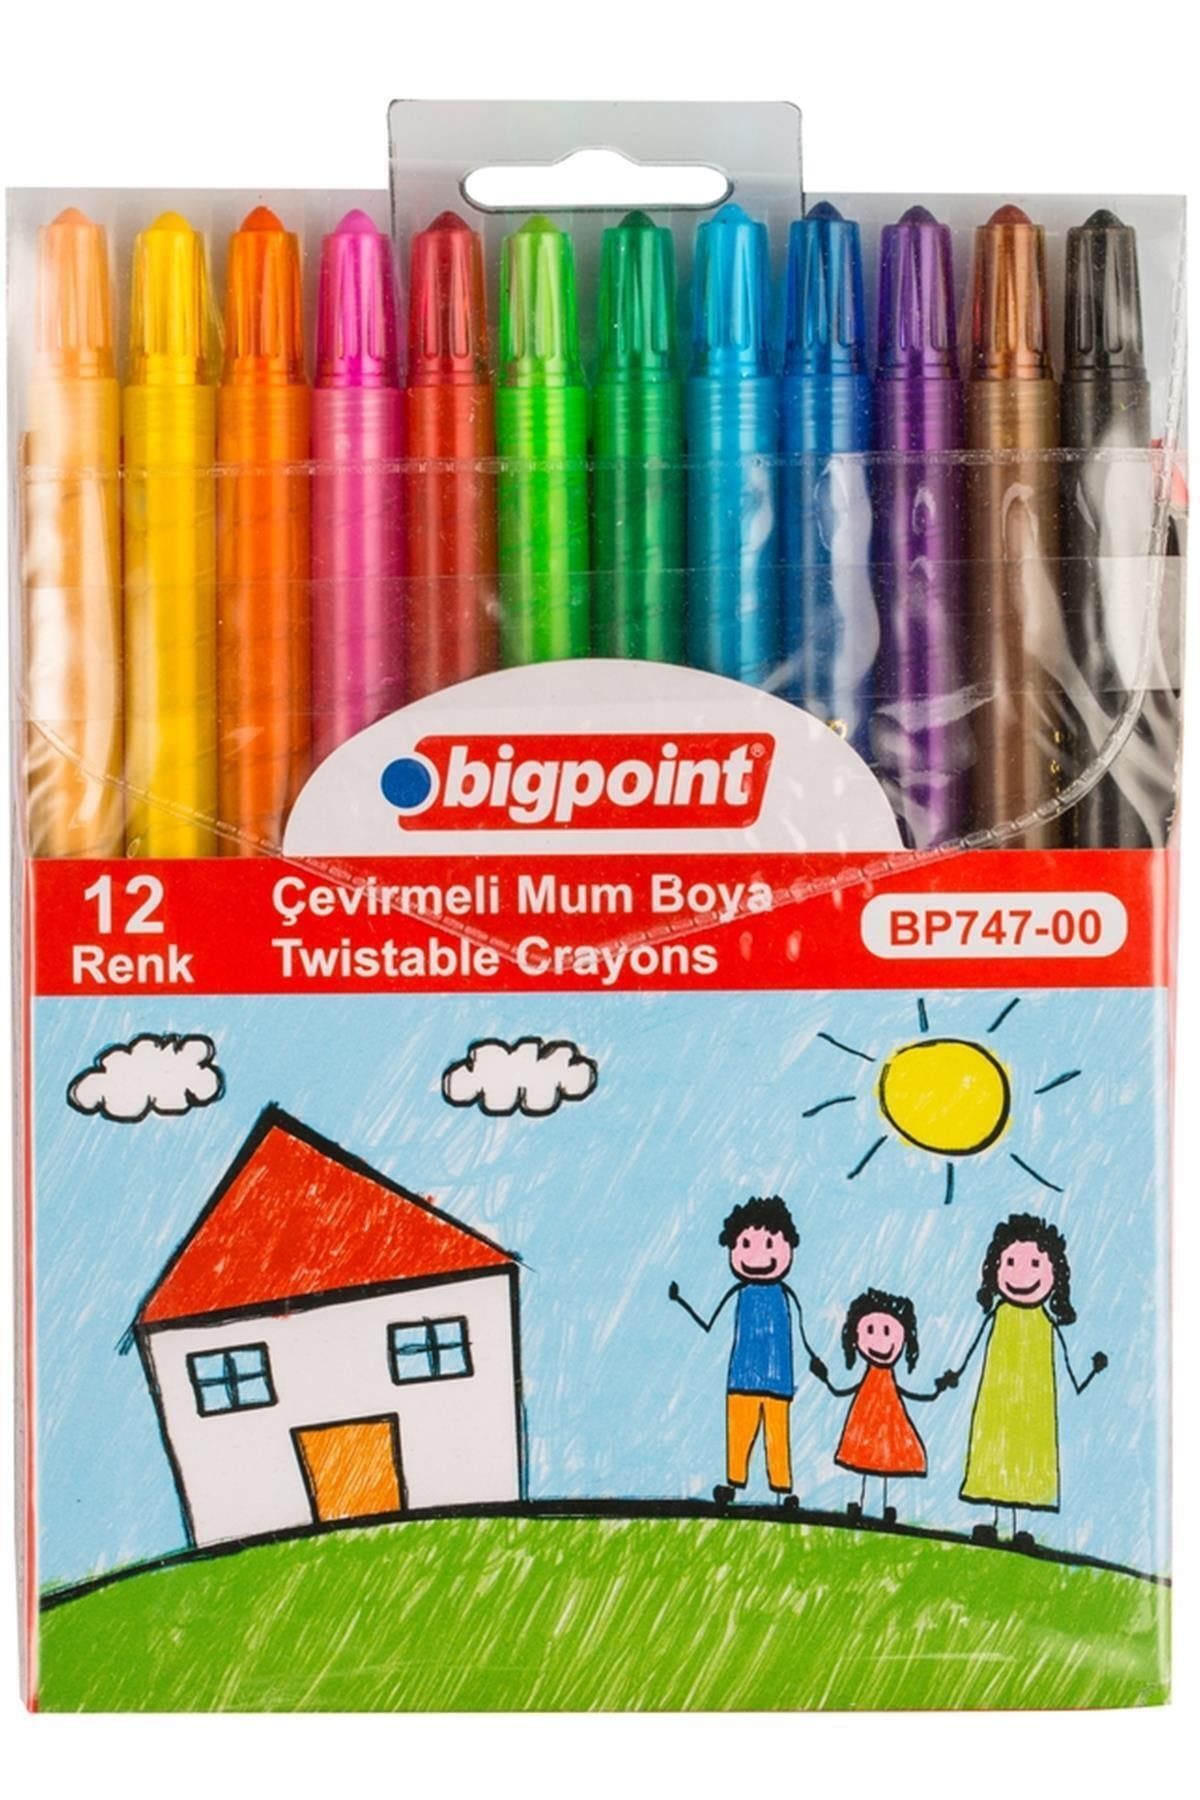 Bigpoint Çevirmeli Mum Boya - 12 Renk 150503